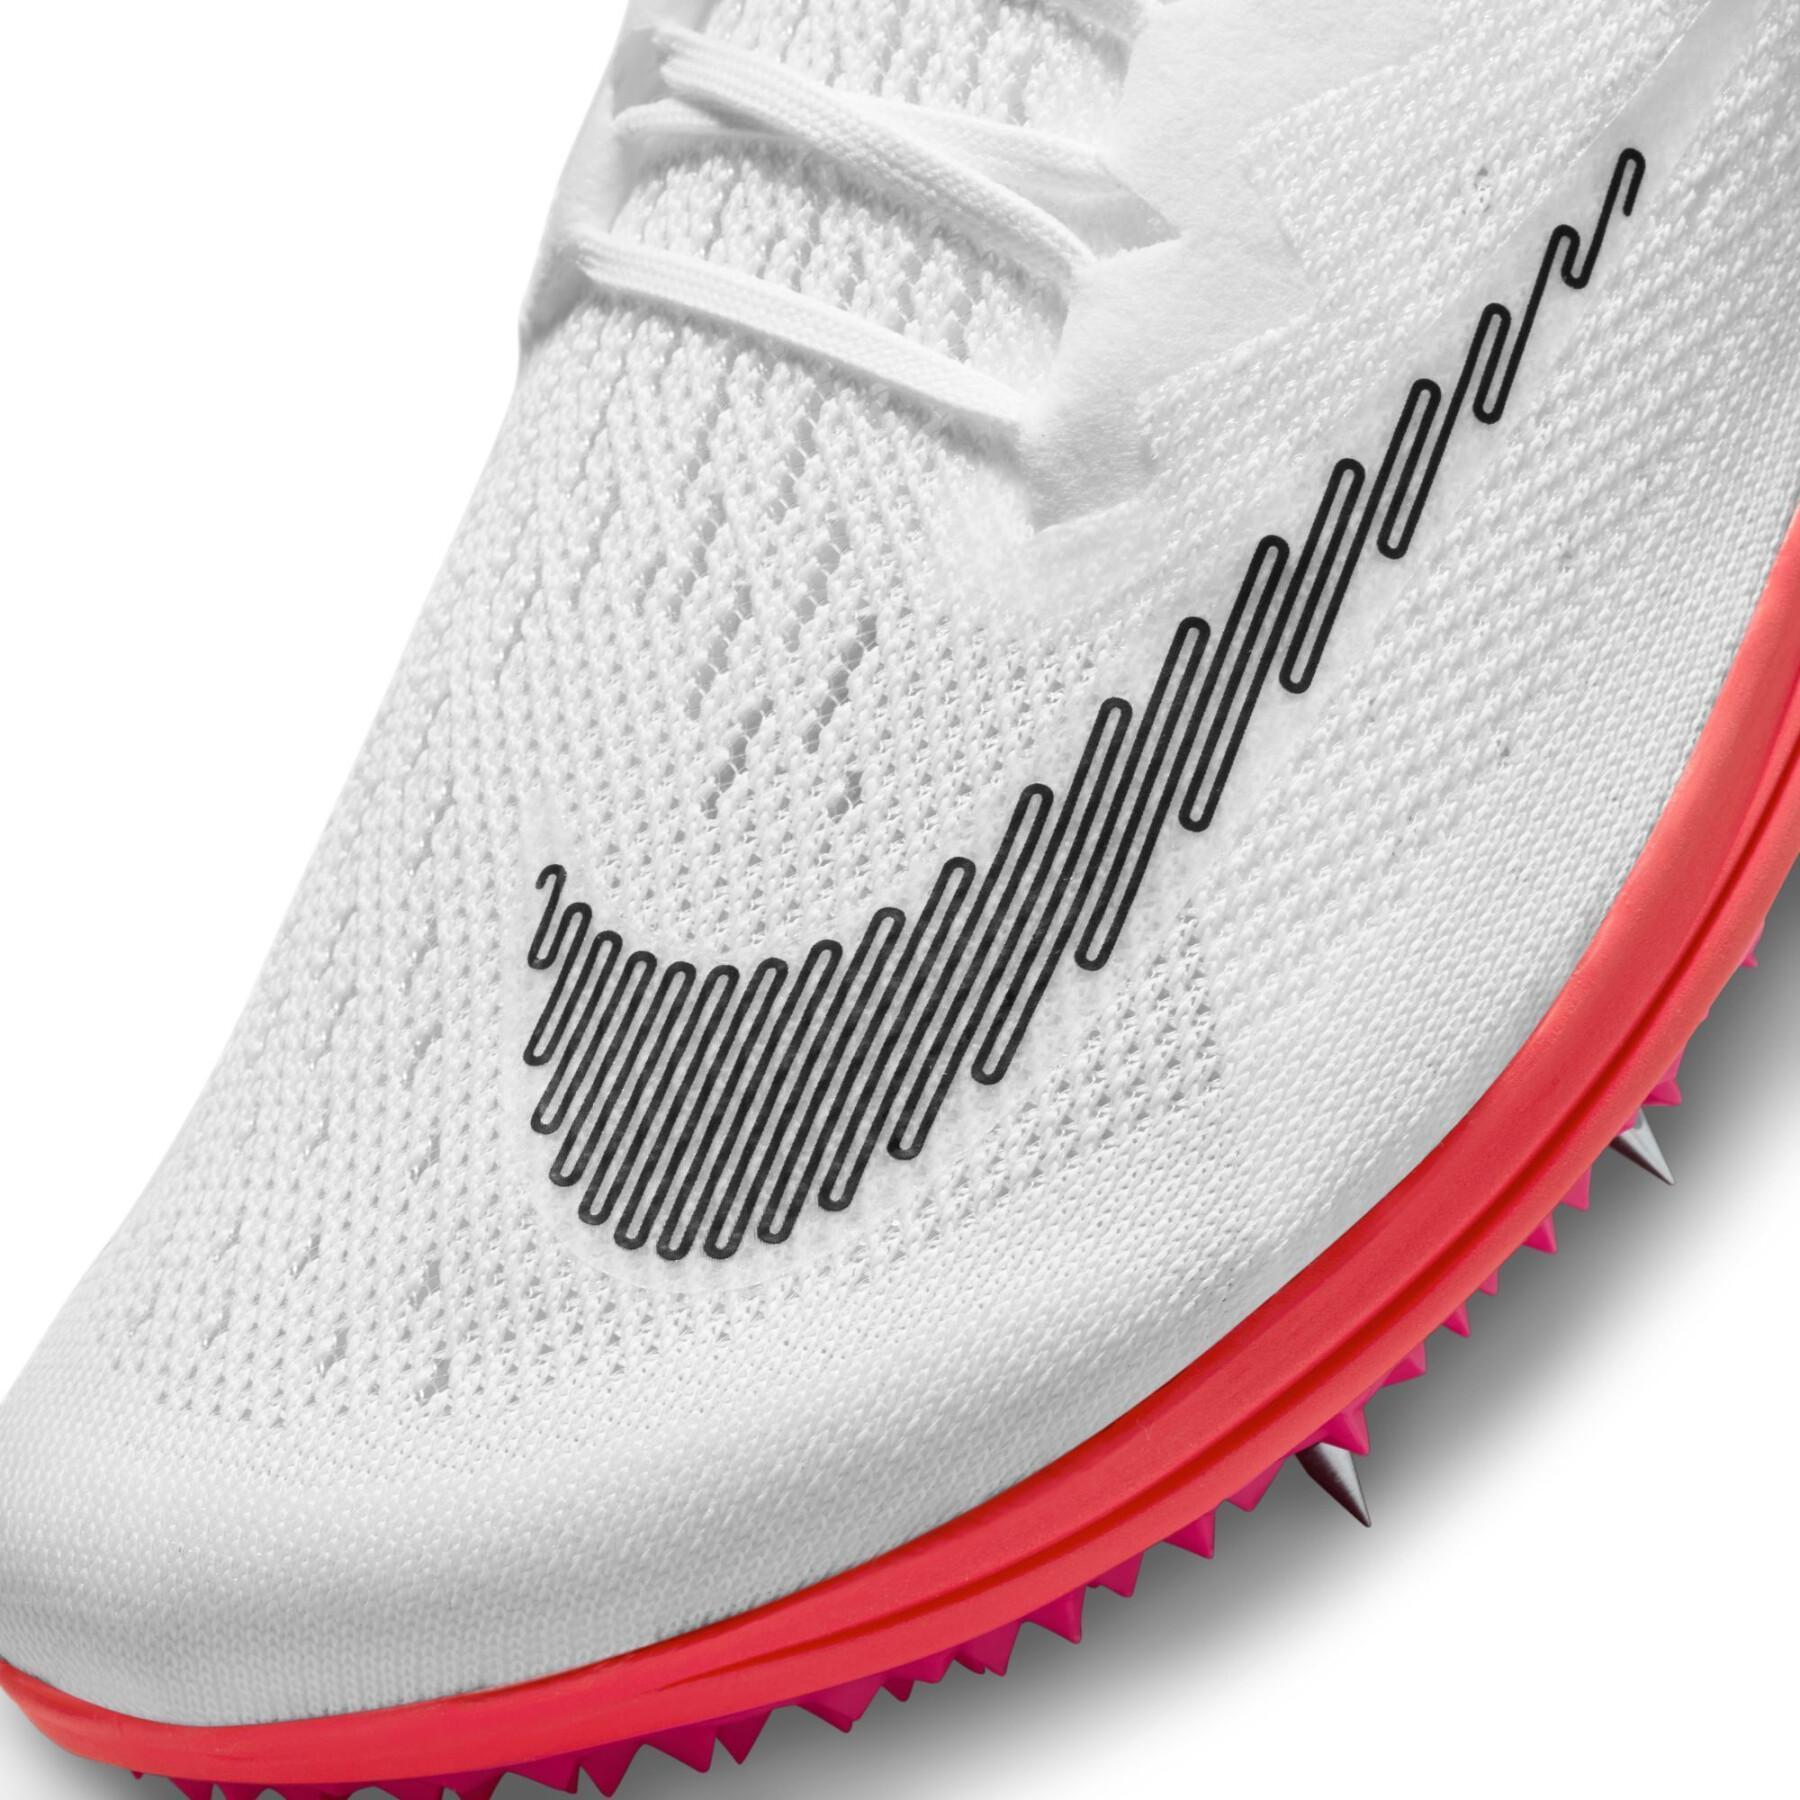 Chaussures de cross training Nike Spike-Flat